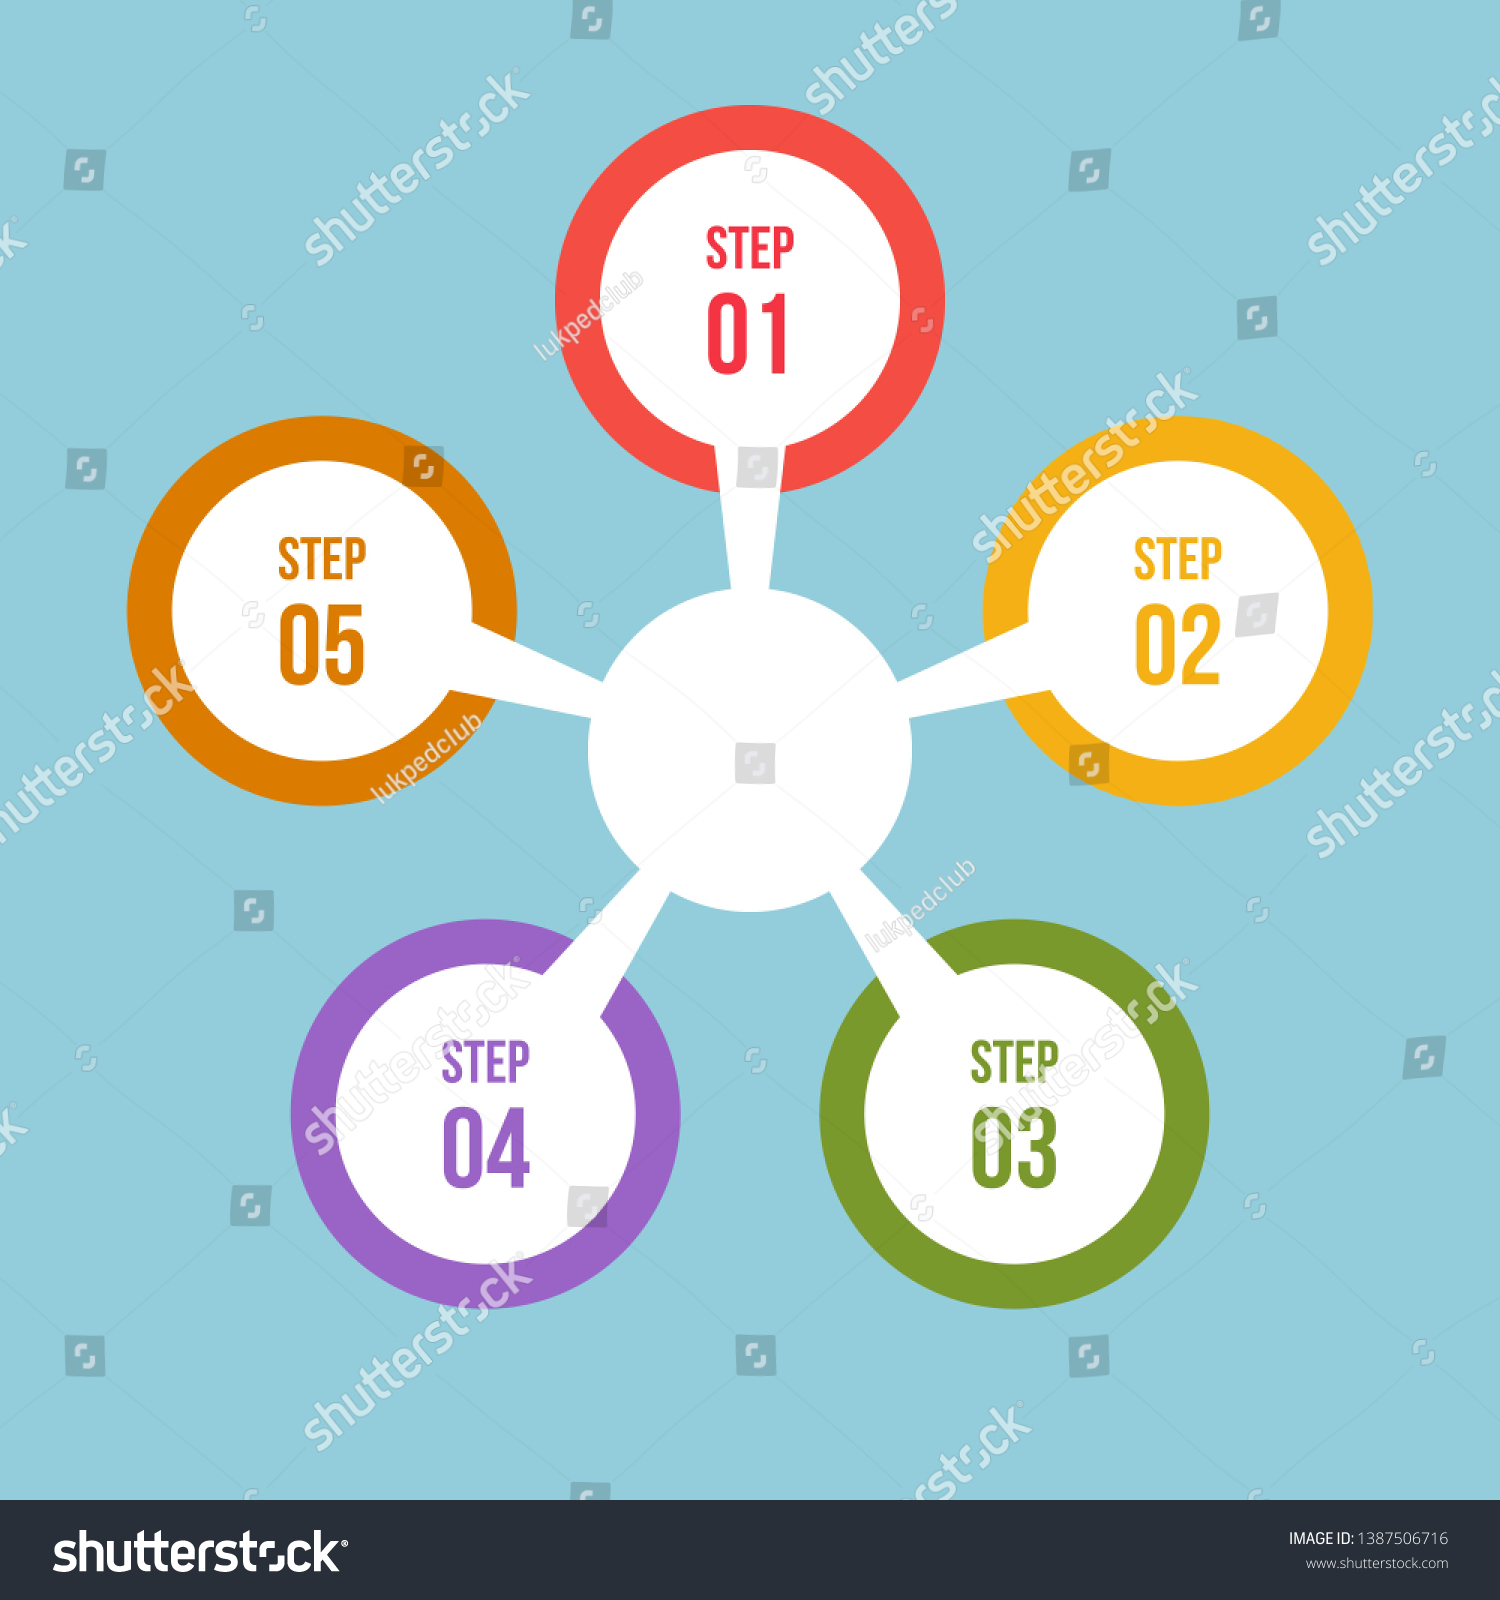 5 Steps Circle Chart Circle Infographic 스톡 벡터로열티 프리 1387506716 Shutterstock 2802